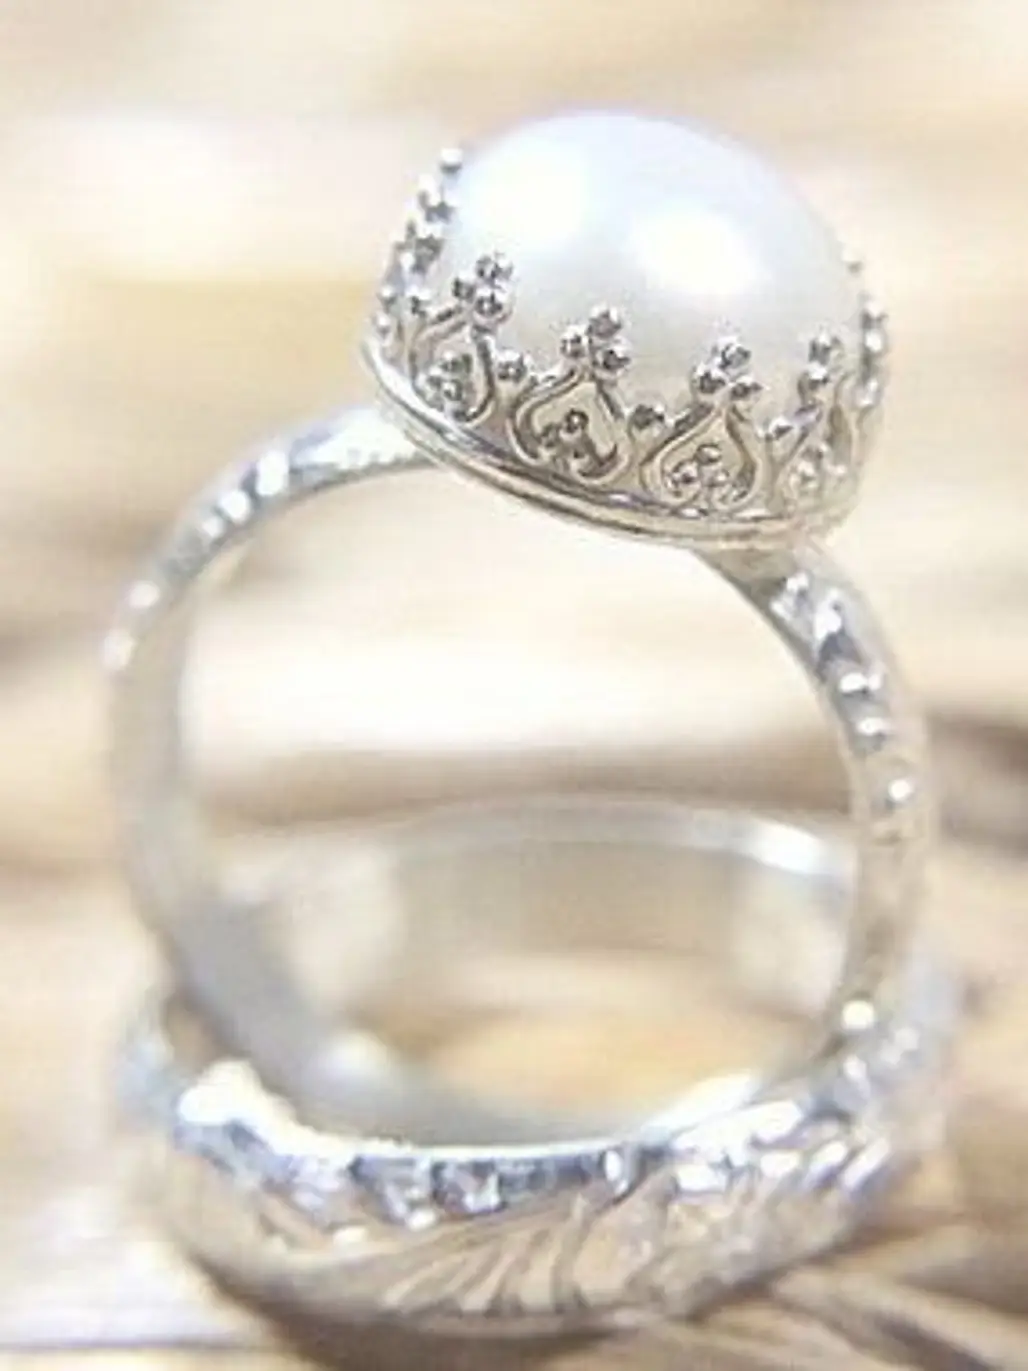 jewellery,ring,fashion accessory,gemstone,wedding ring,